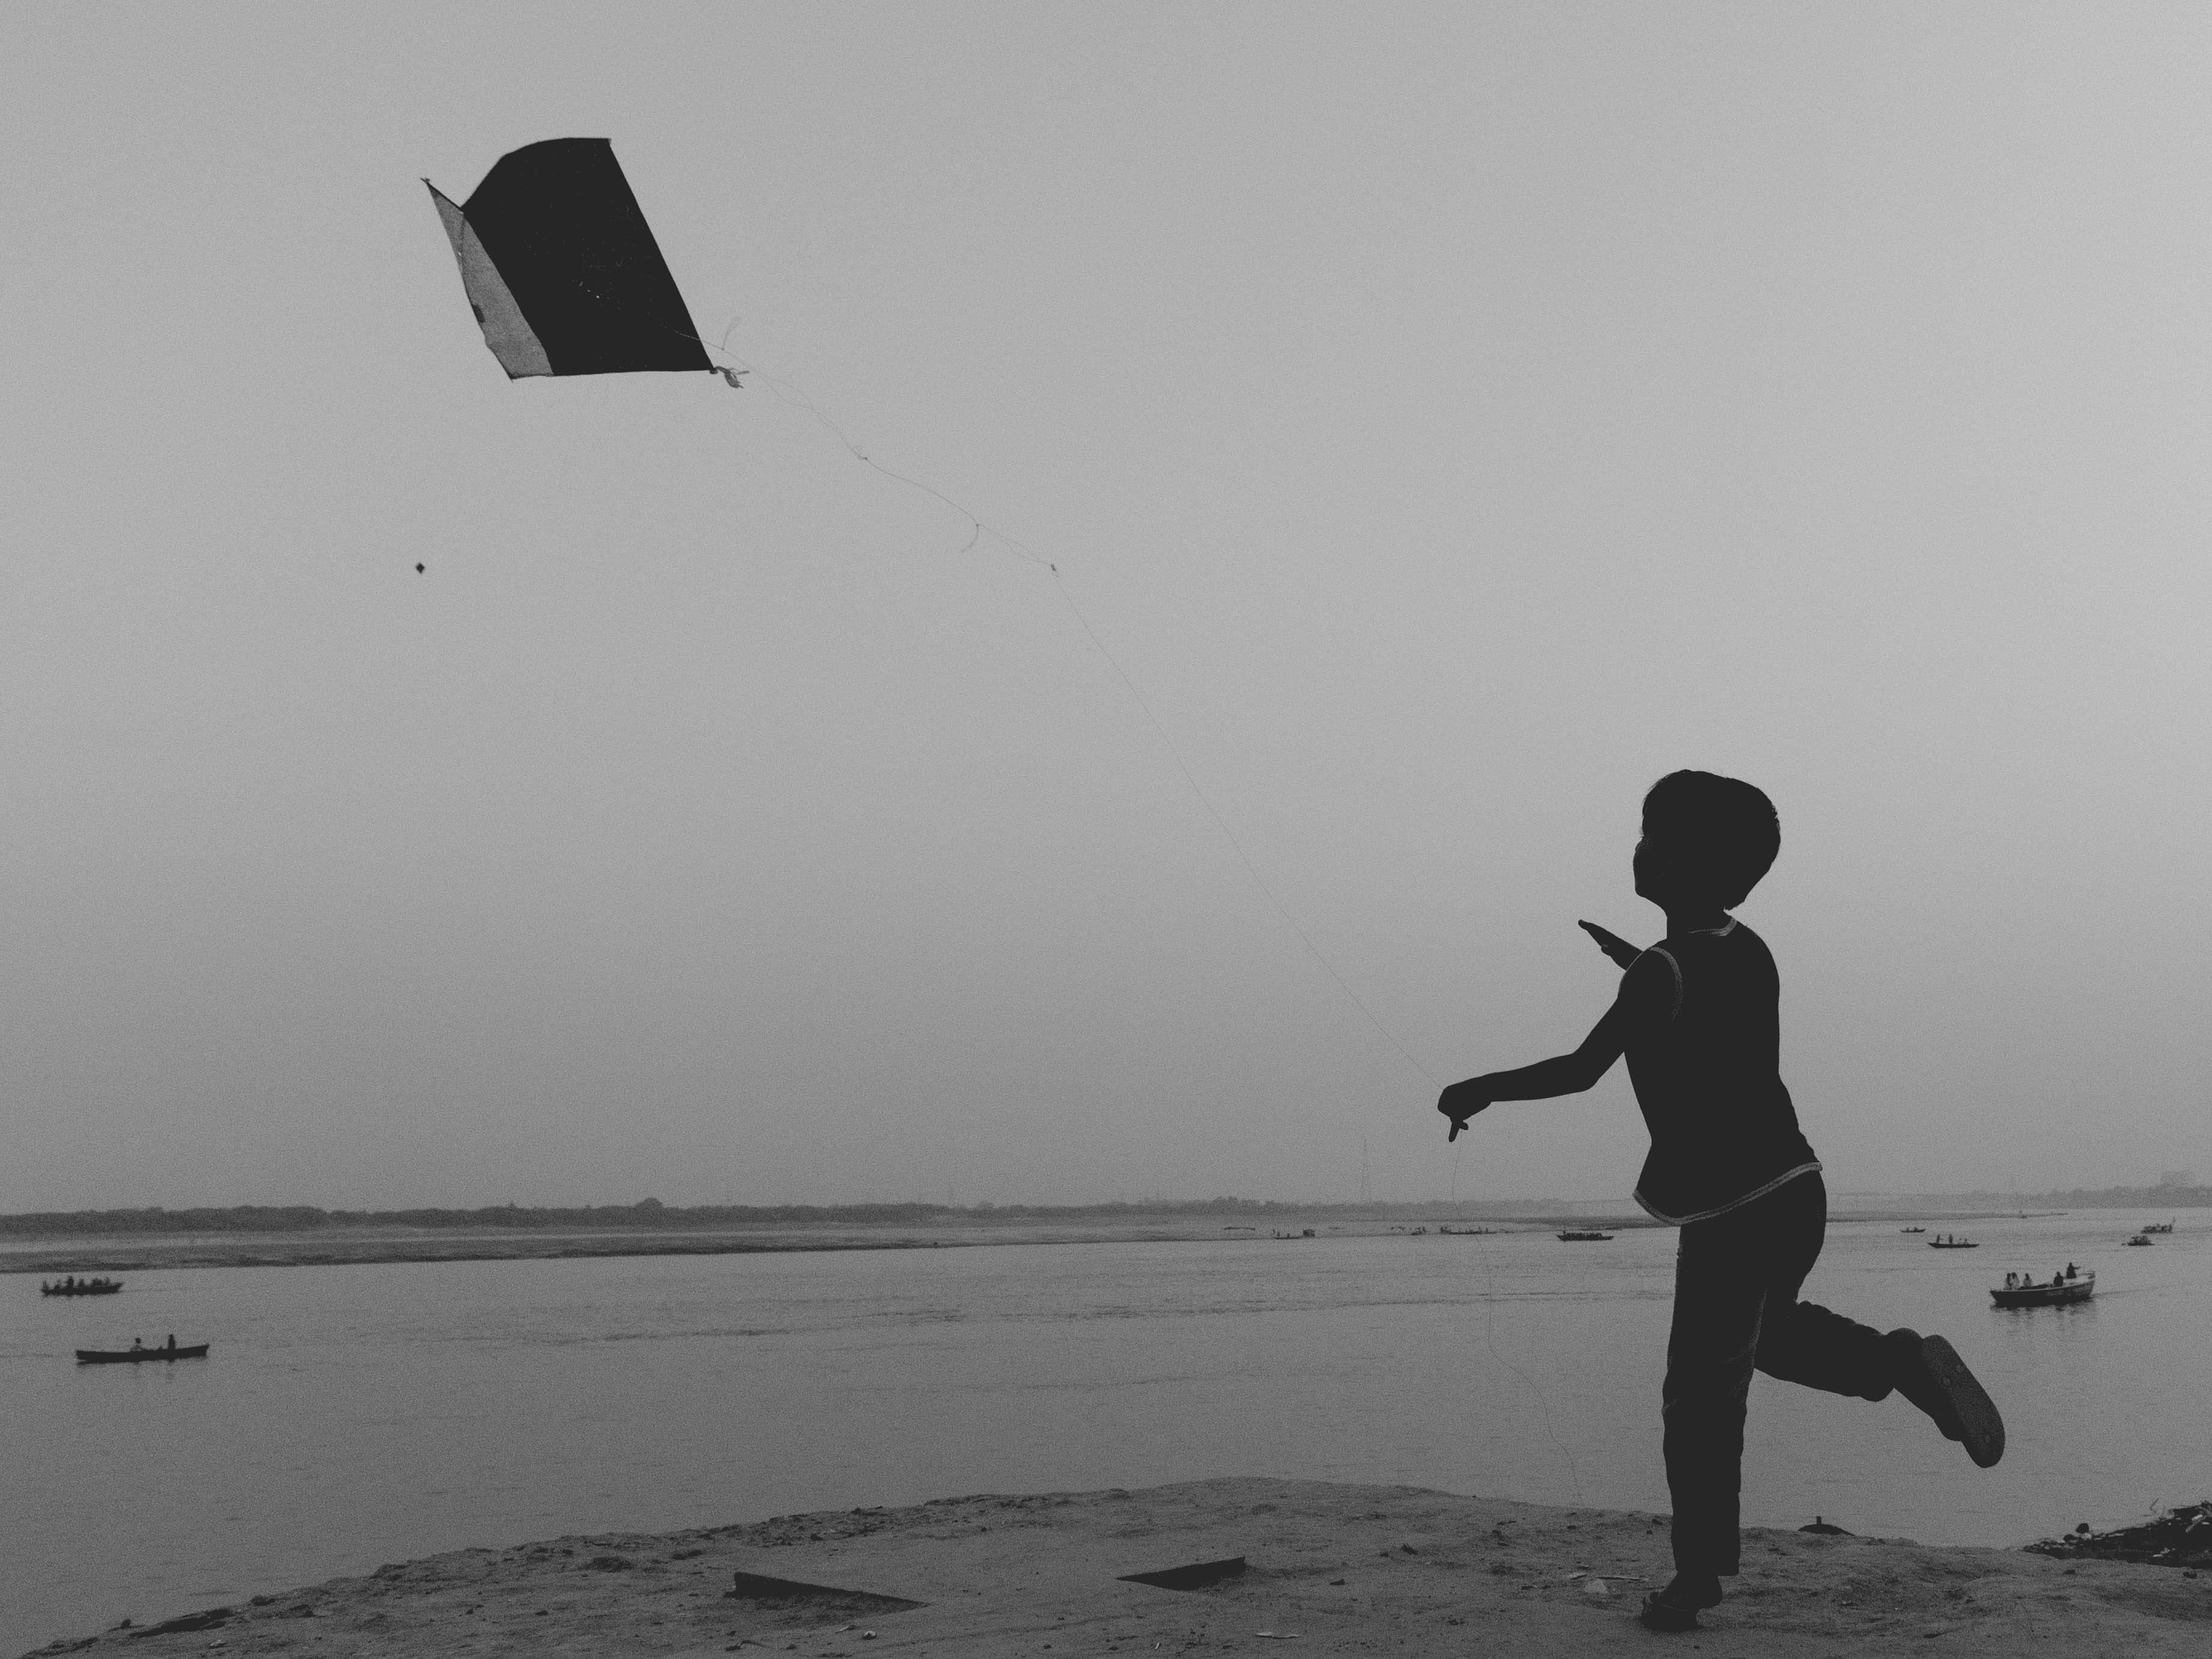 varanasi, india, kite flying, black and white, bnw, lake, kid